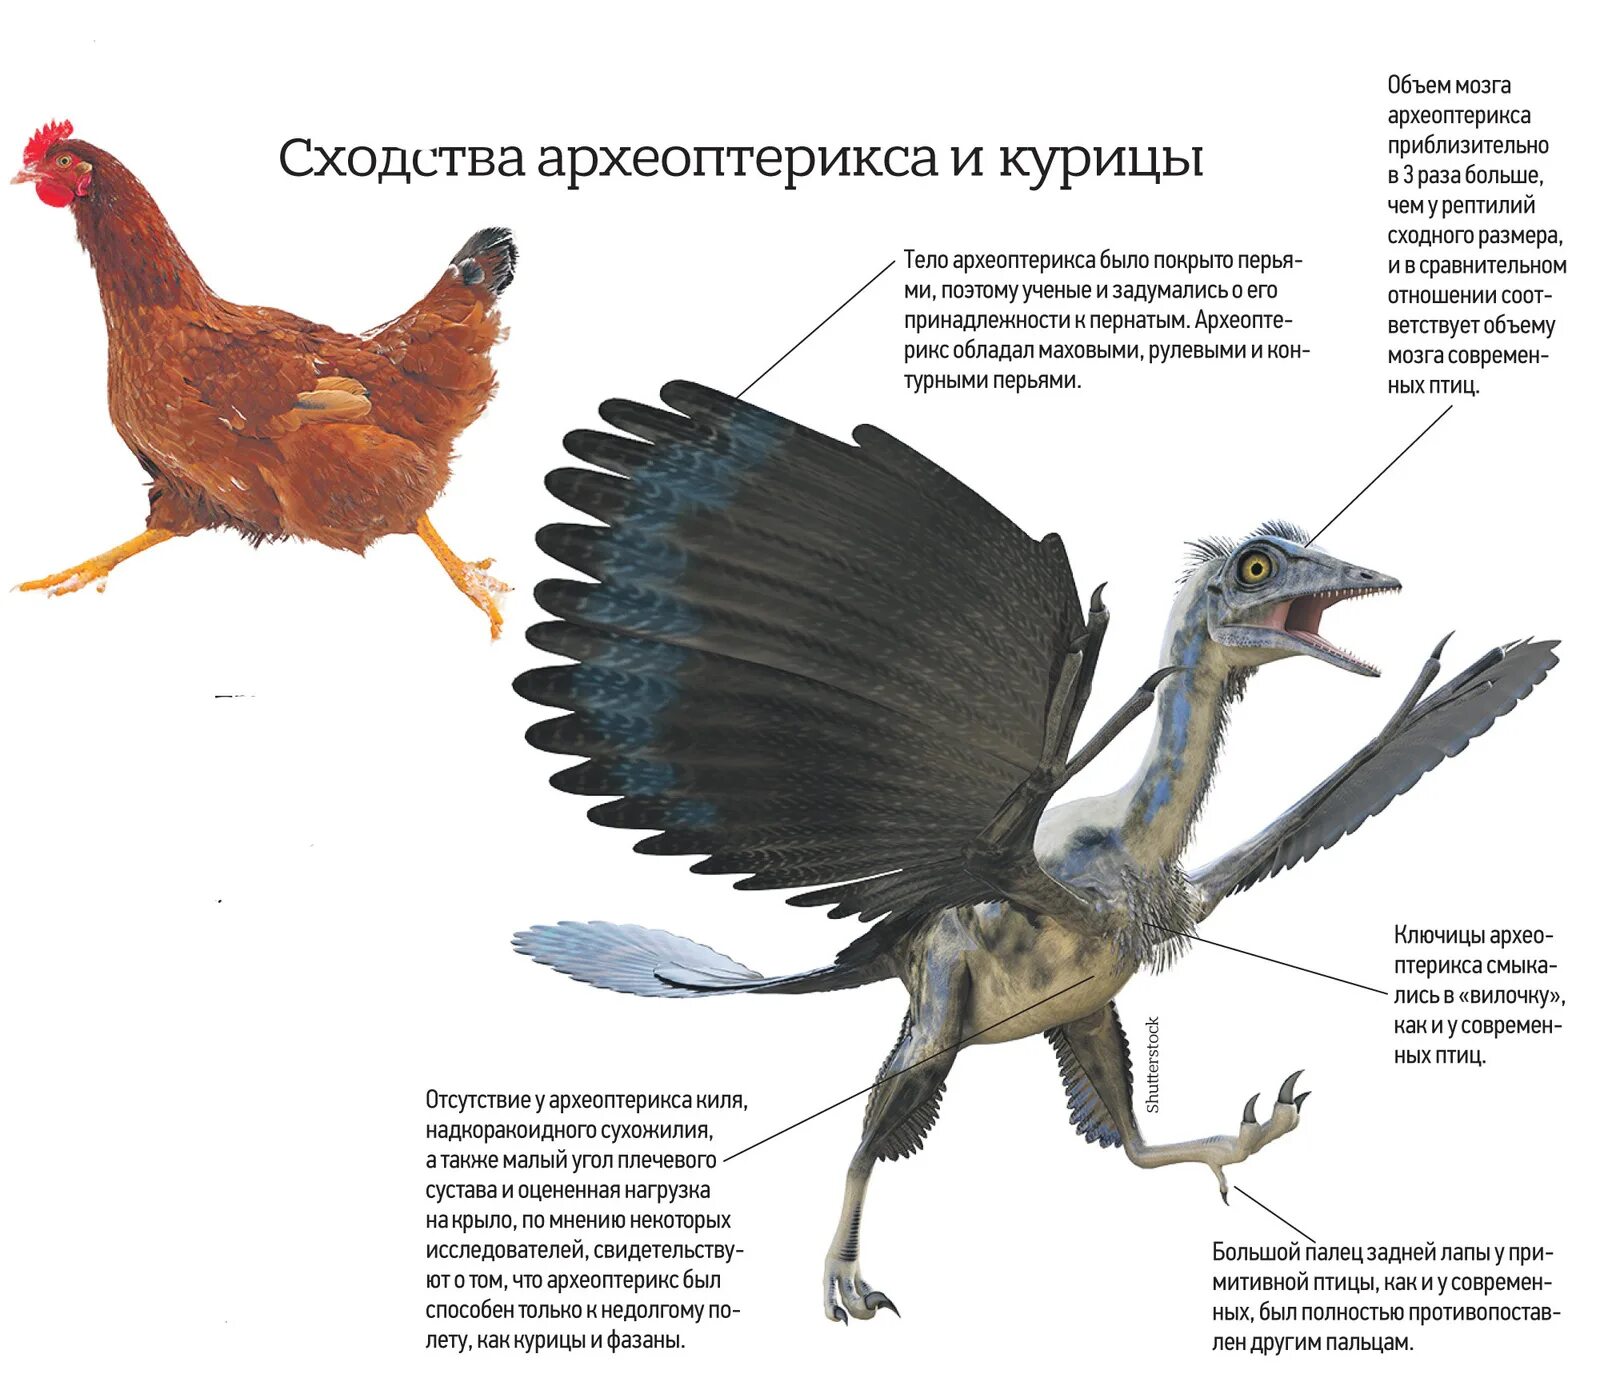 Задние конечности археоптерикса. Особенности строения археоптерикса. Птица Археоптерикс строение. Археоптерикс внутренне строение.